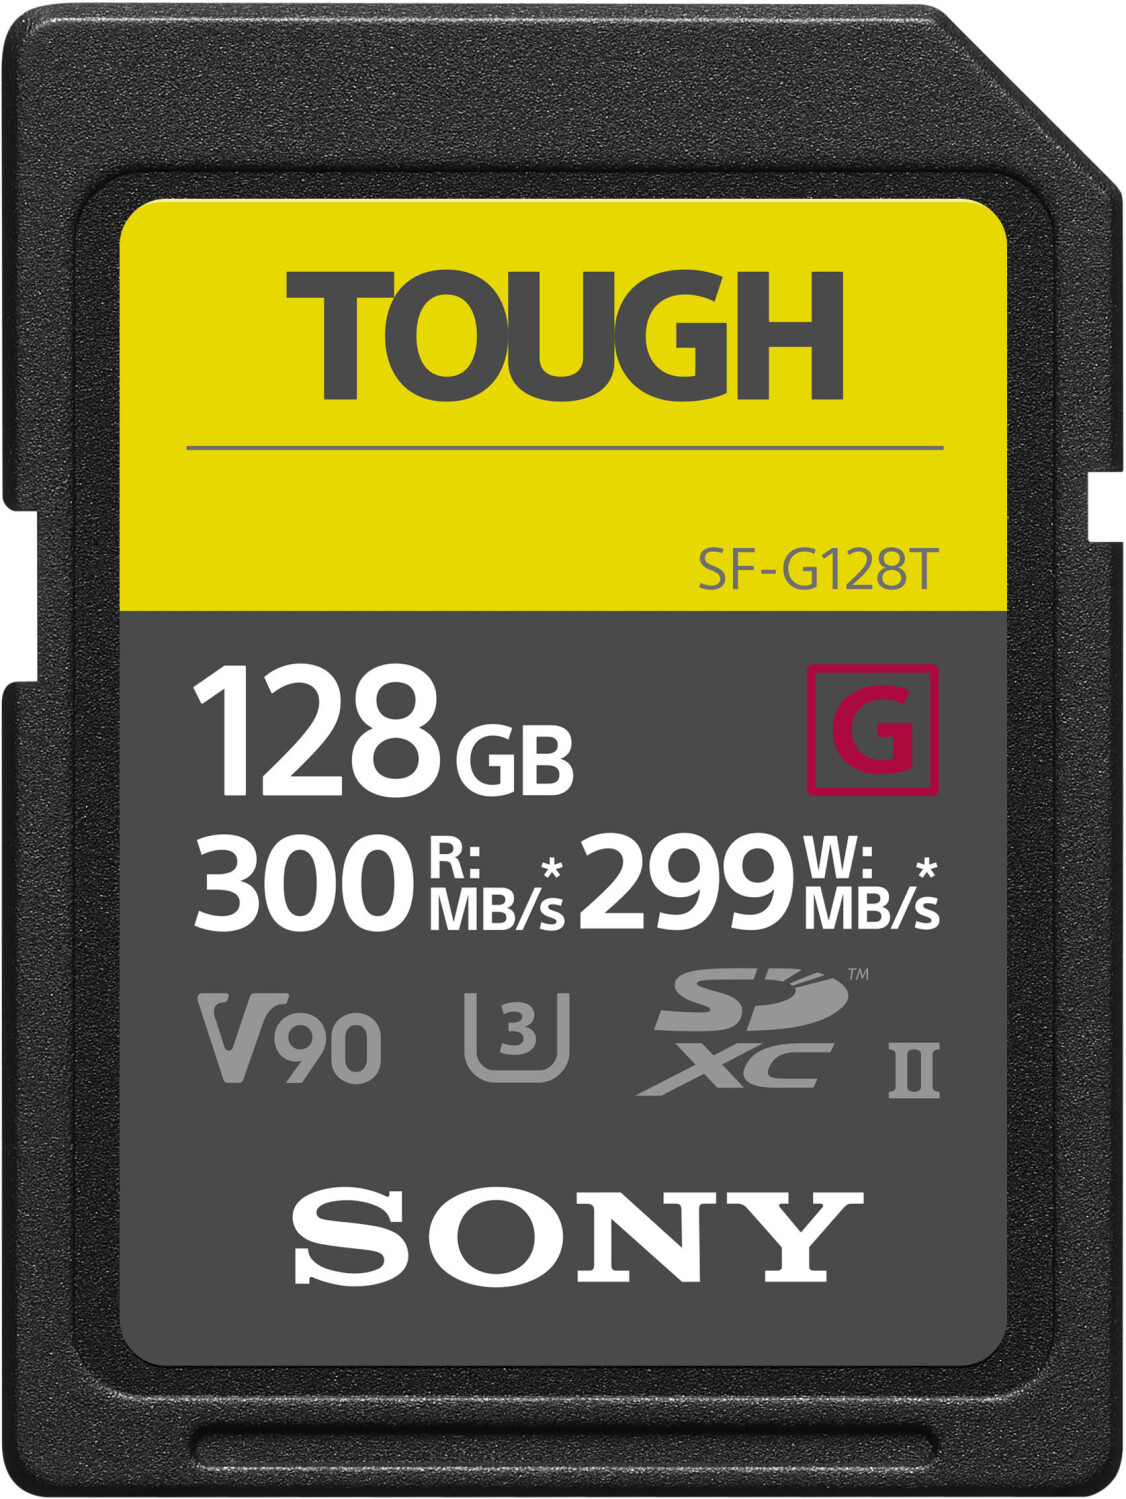 Sony SF-G TOUGH SD UHS-II (R300/W299) 128GB